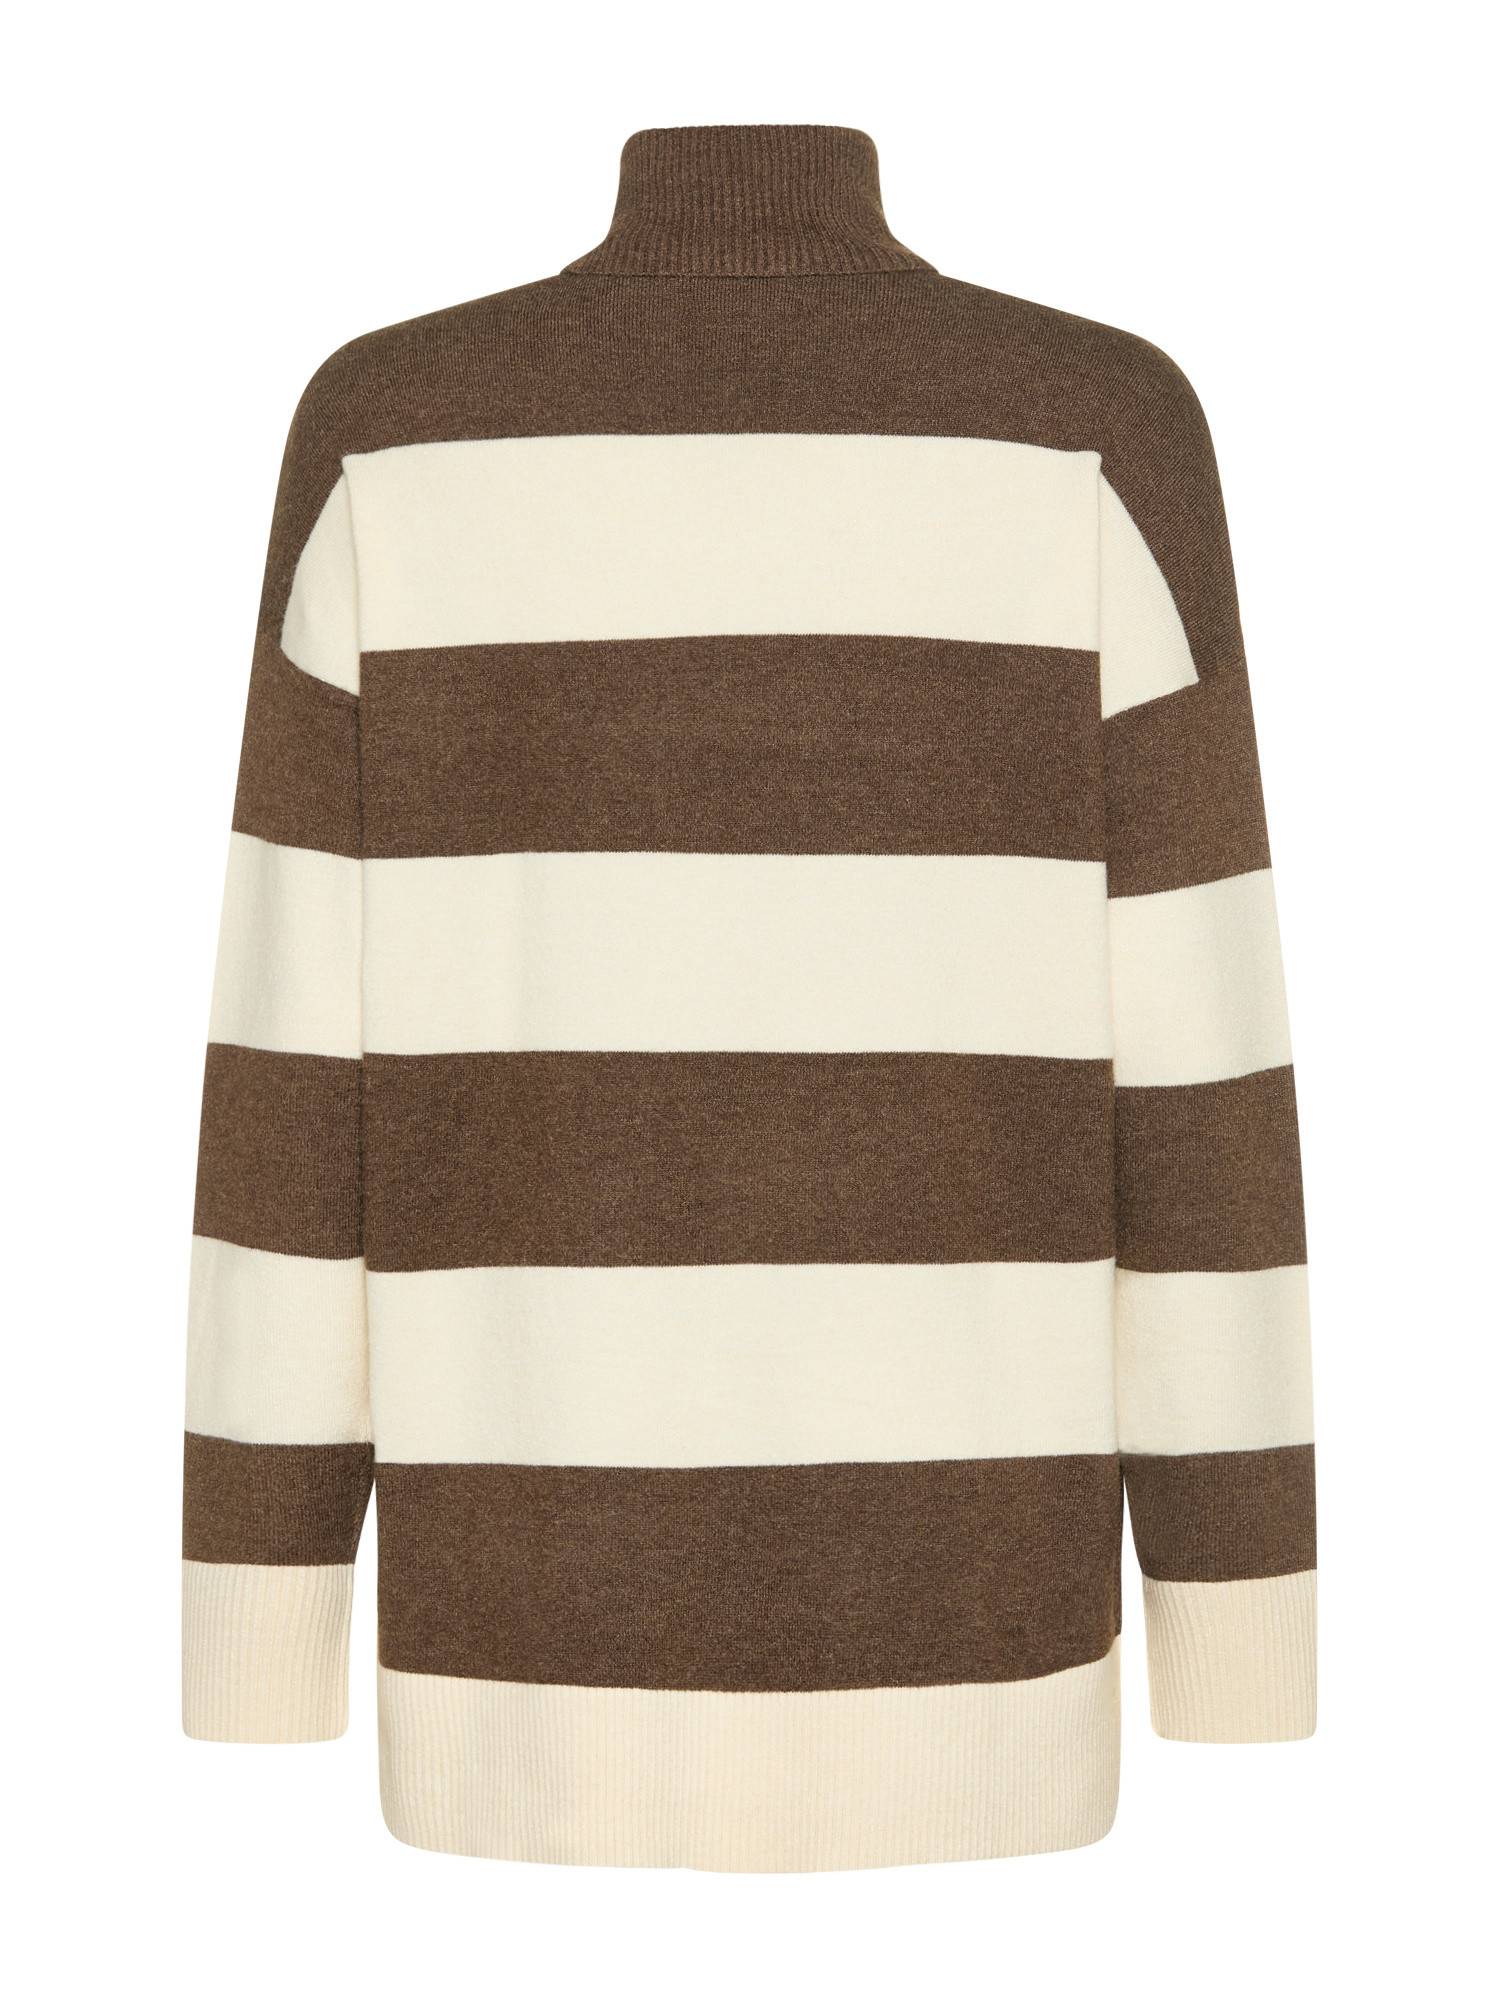 Only - Striped knit turtleneck, Brown, large image number 1